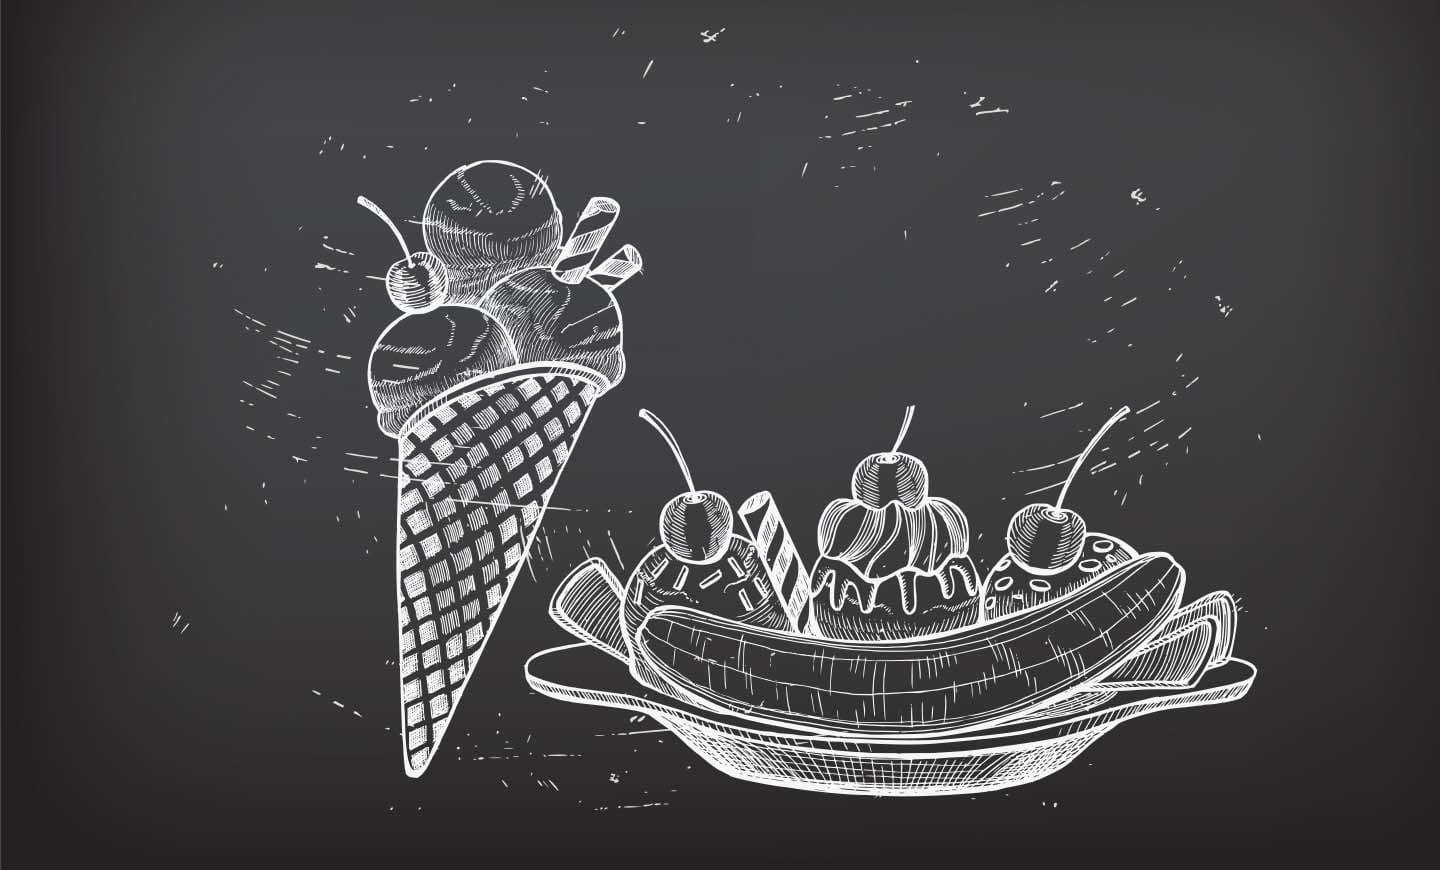 ice cream cone and banana split chalkboard drawing chattanooga